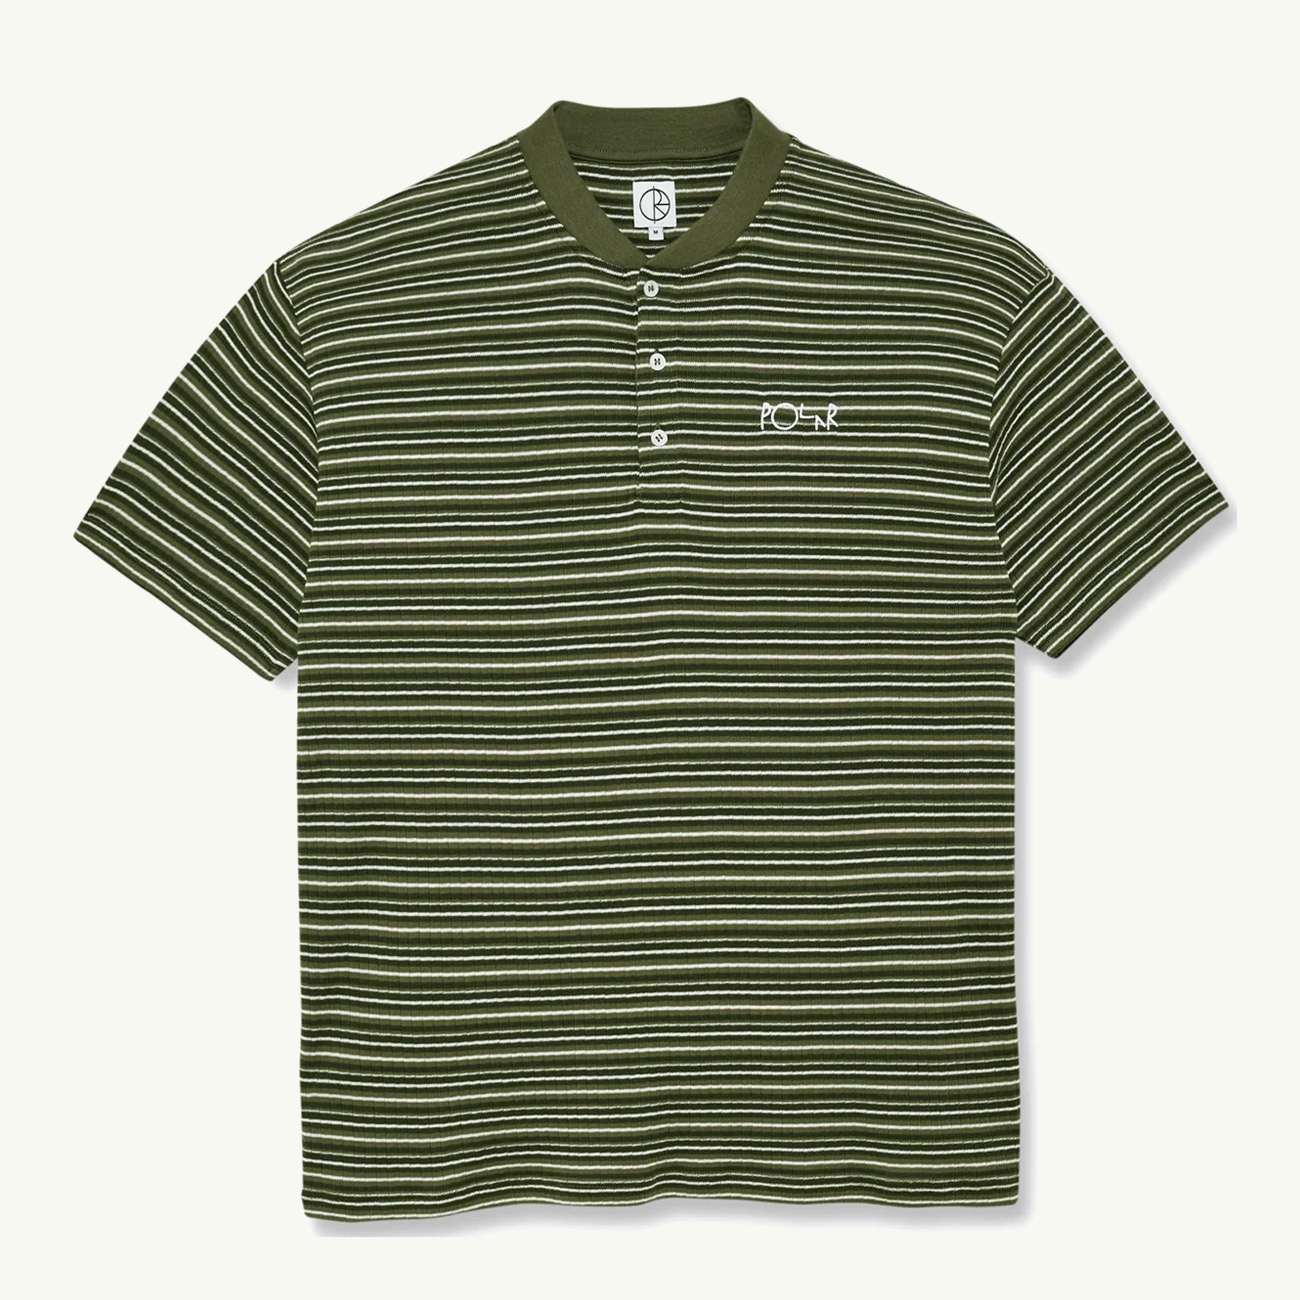 Stripe Rib Henley Tee - Uniform Green